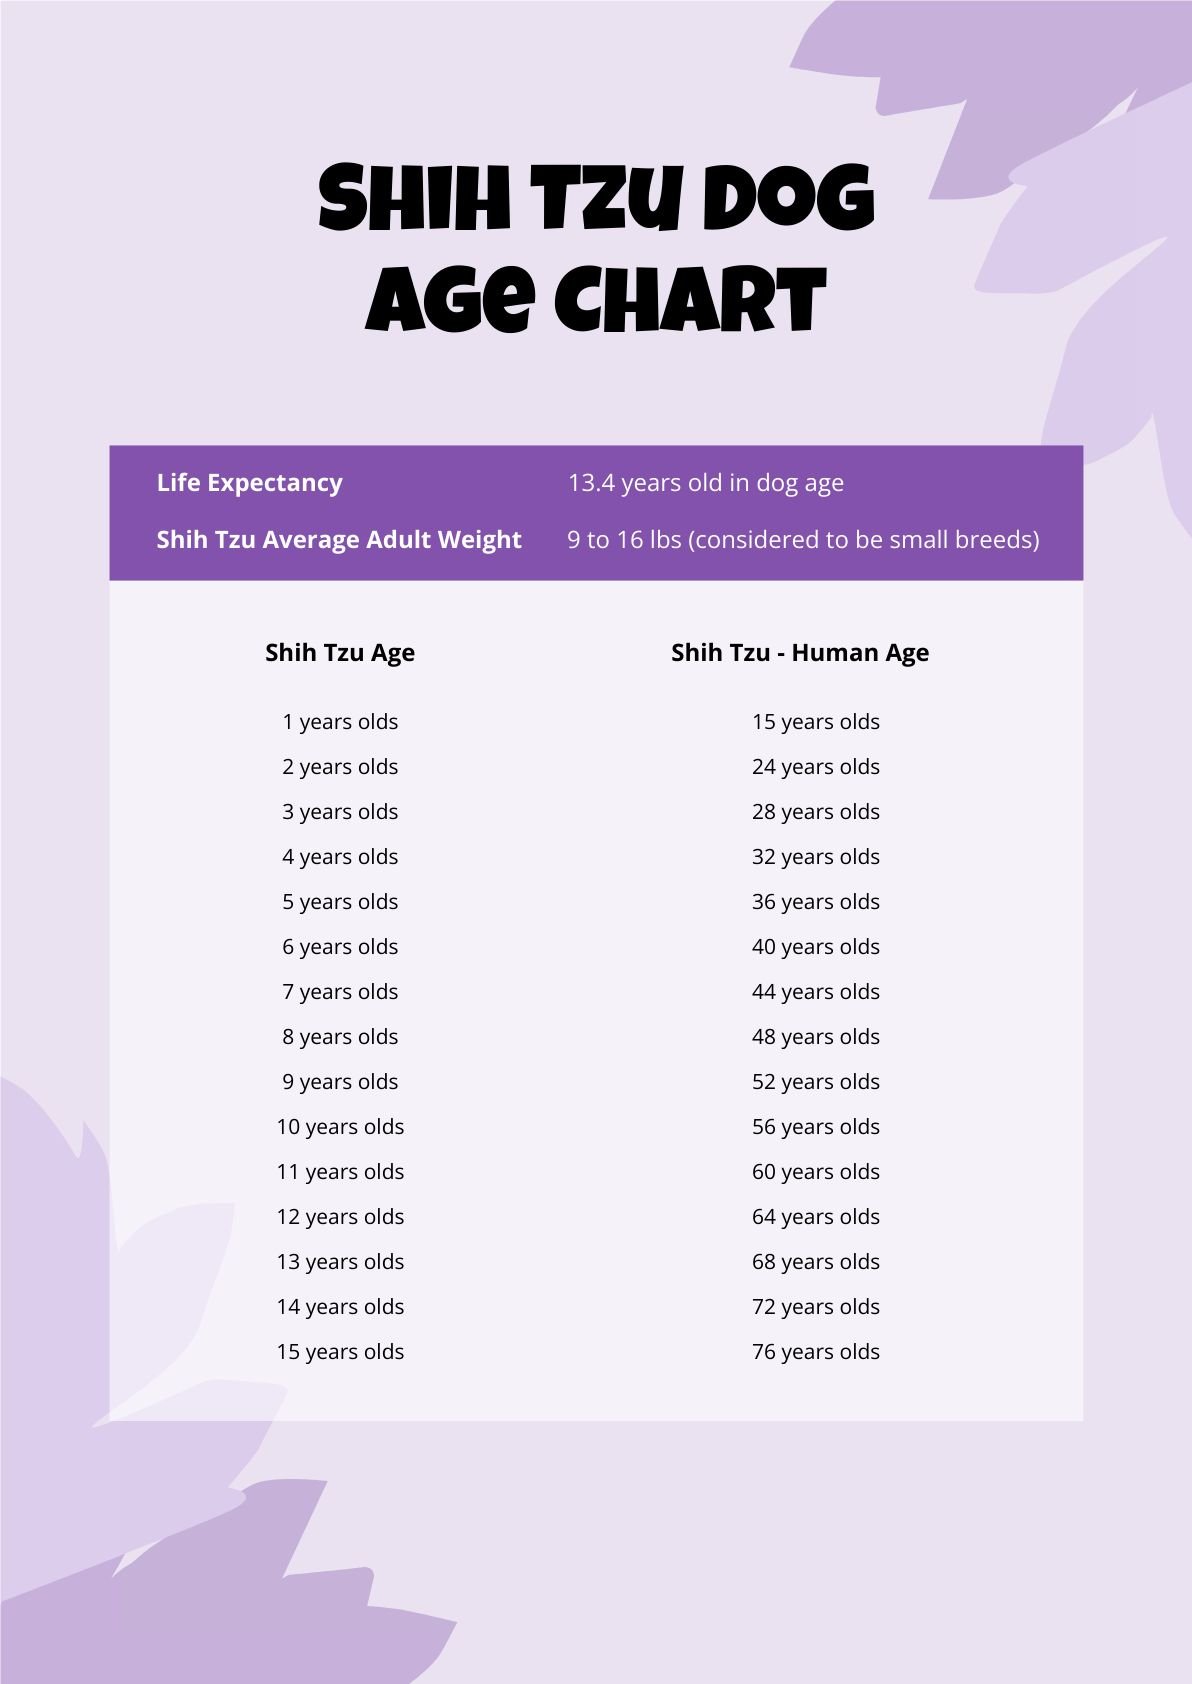 Shih Tzu Dog Age Chart in PDF